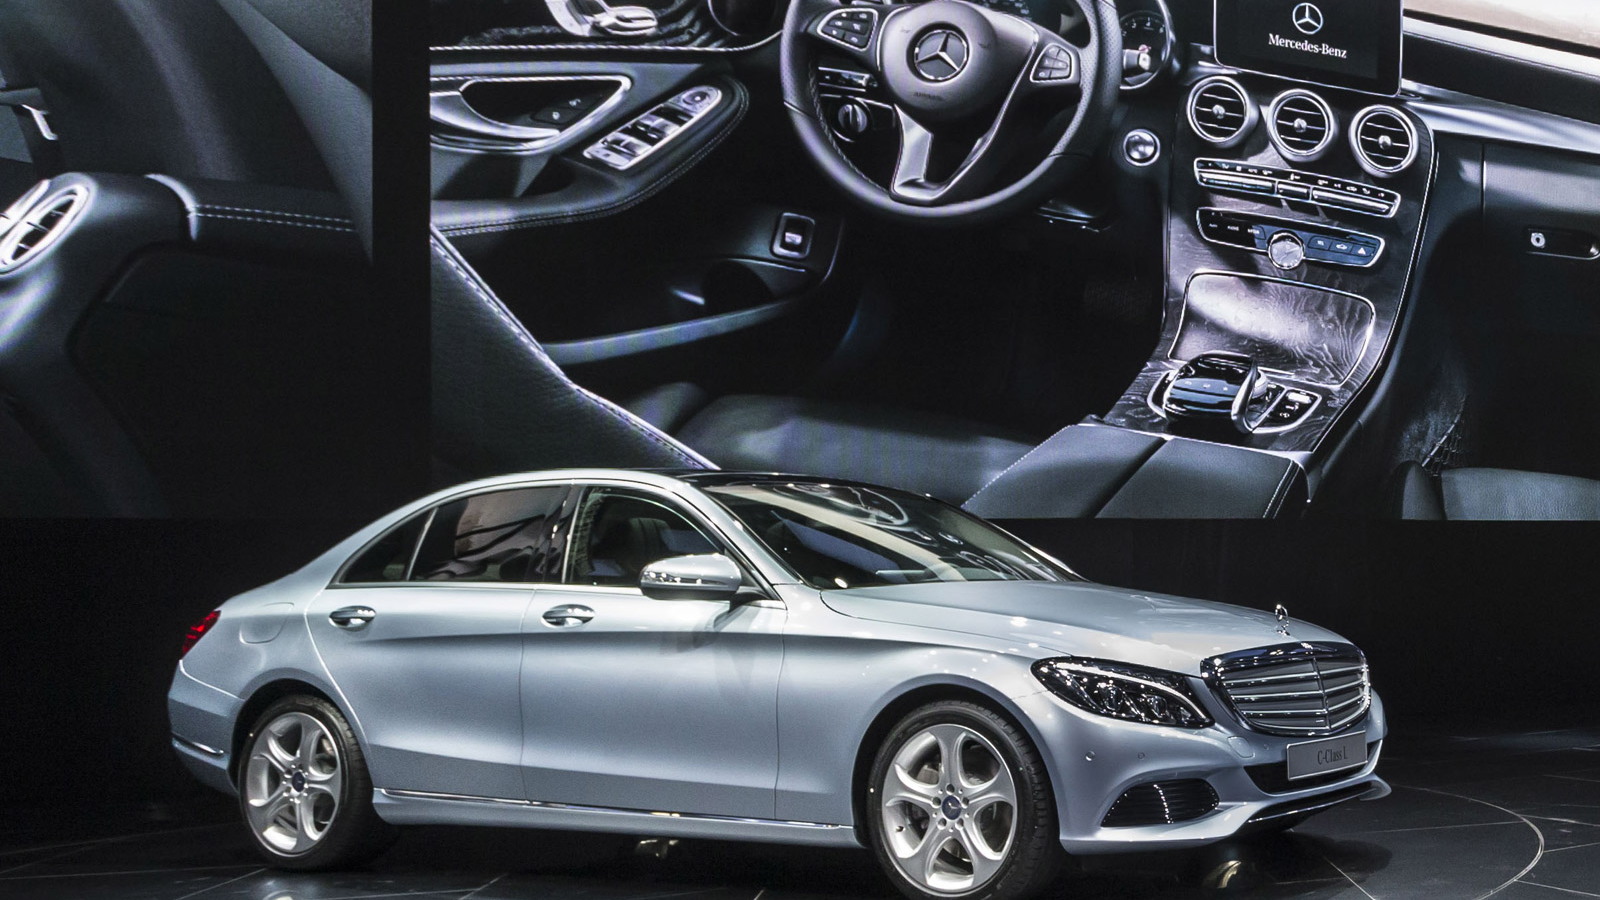 2015 Mercedes-Benz C-Class L, 2014 Beijing Auto Show